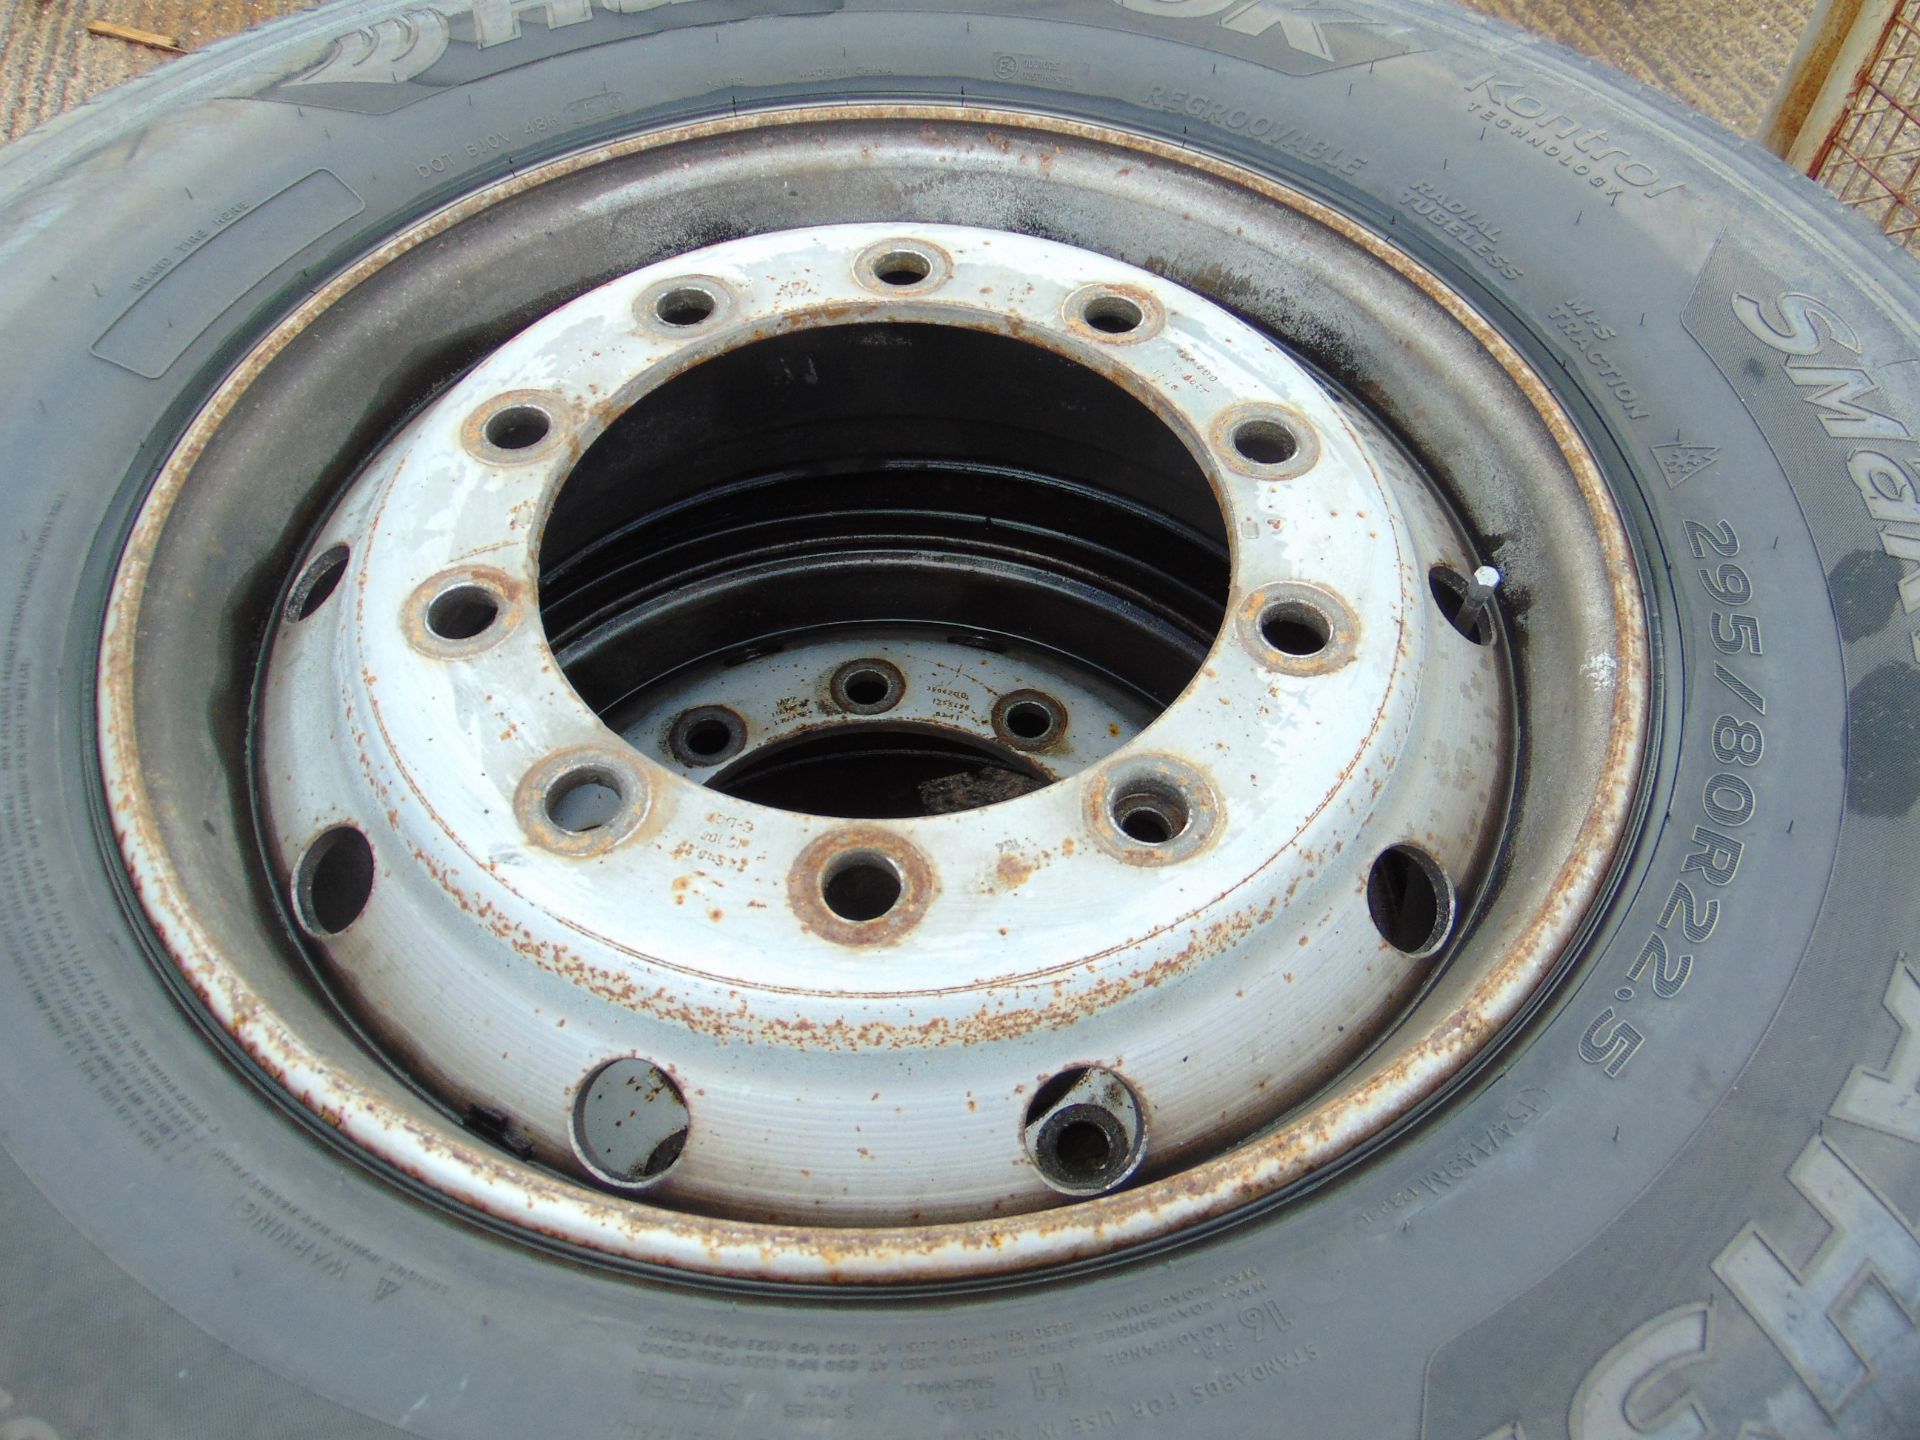 2x 295/80 R22.5 Tyres on 10 Stud Rims - Bild 3 aus 5